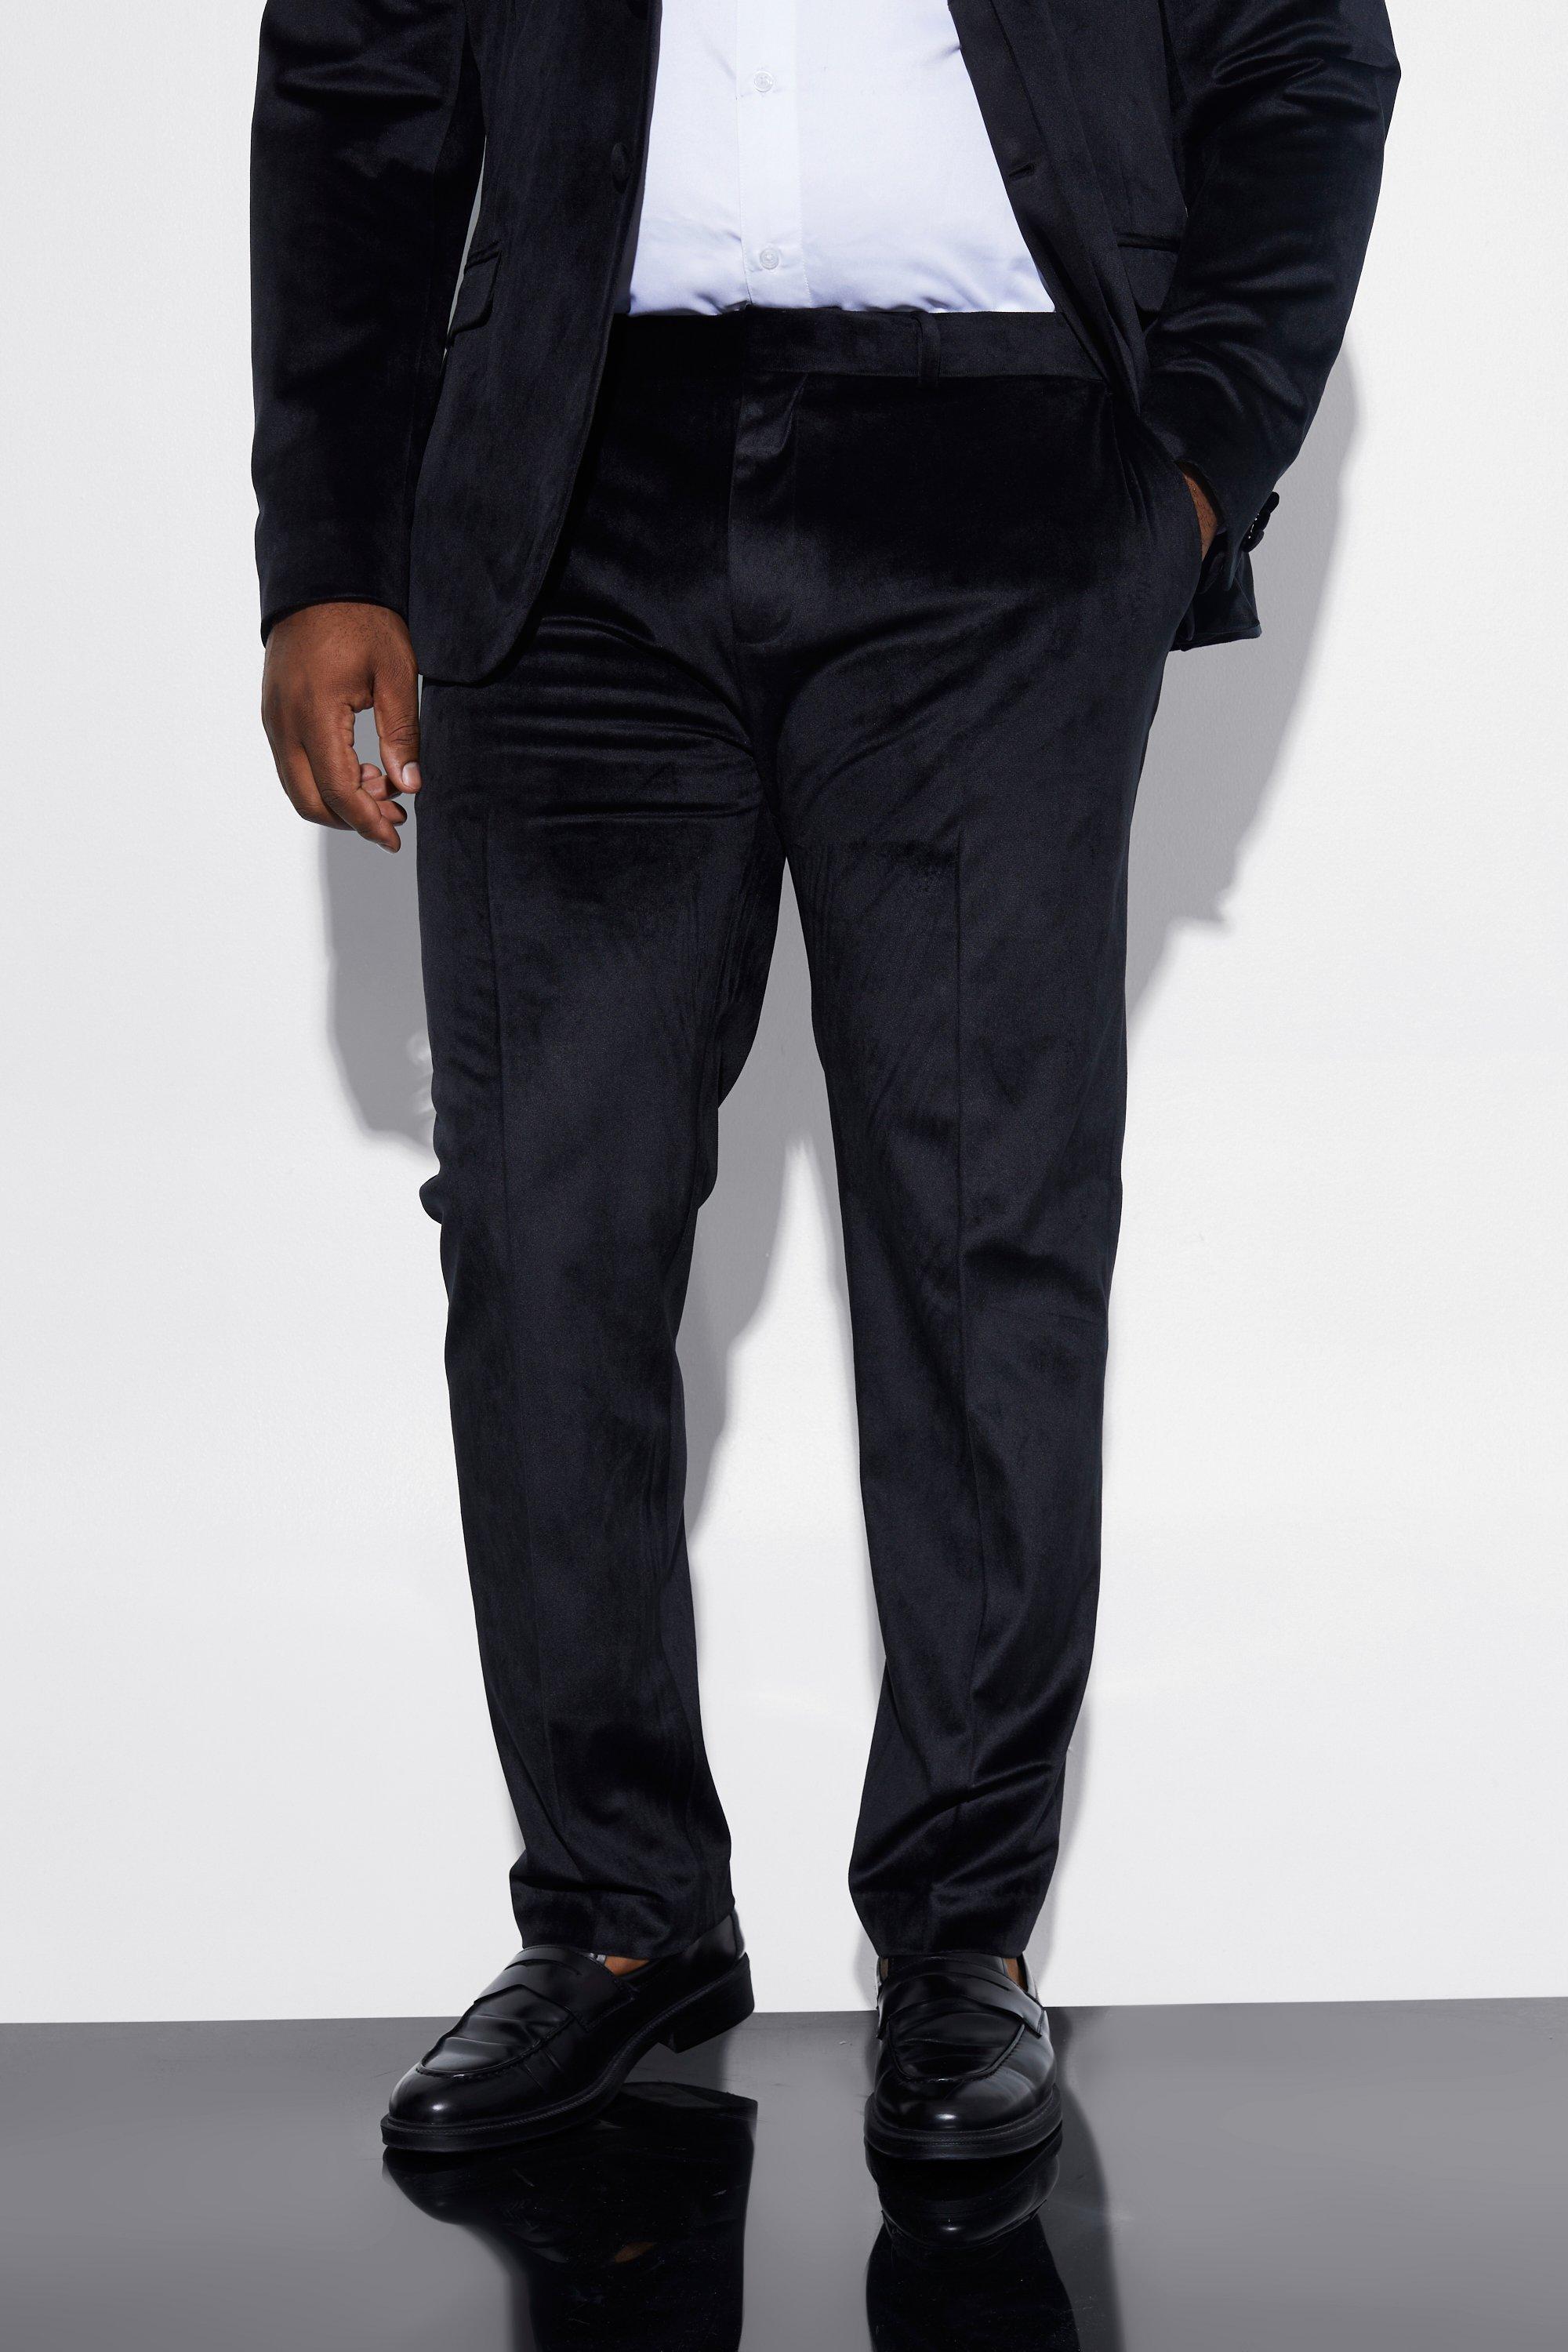 grande taille - pantalon de costume skinny en velours homme - noir - 44r, noir